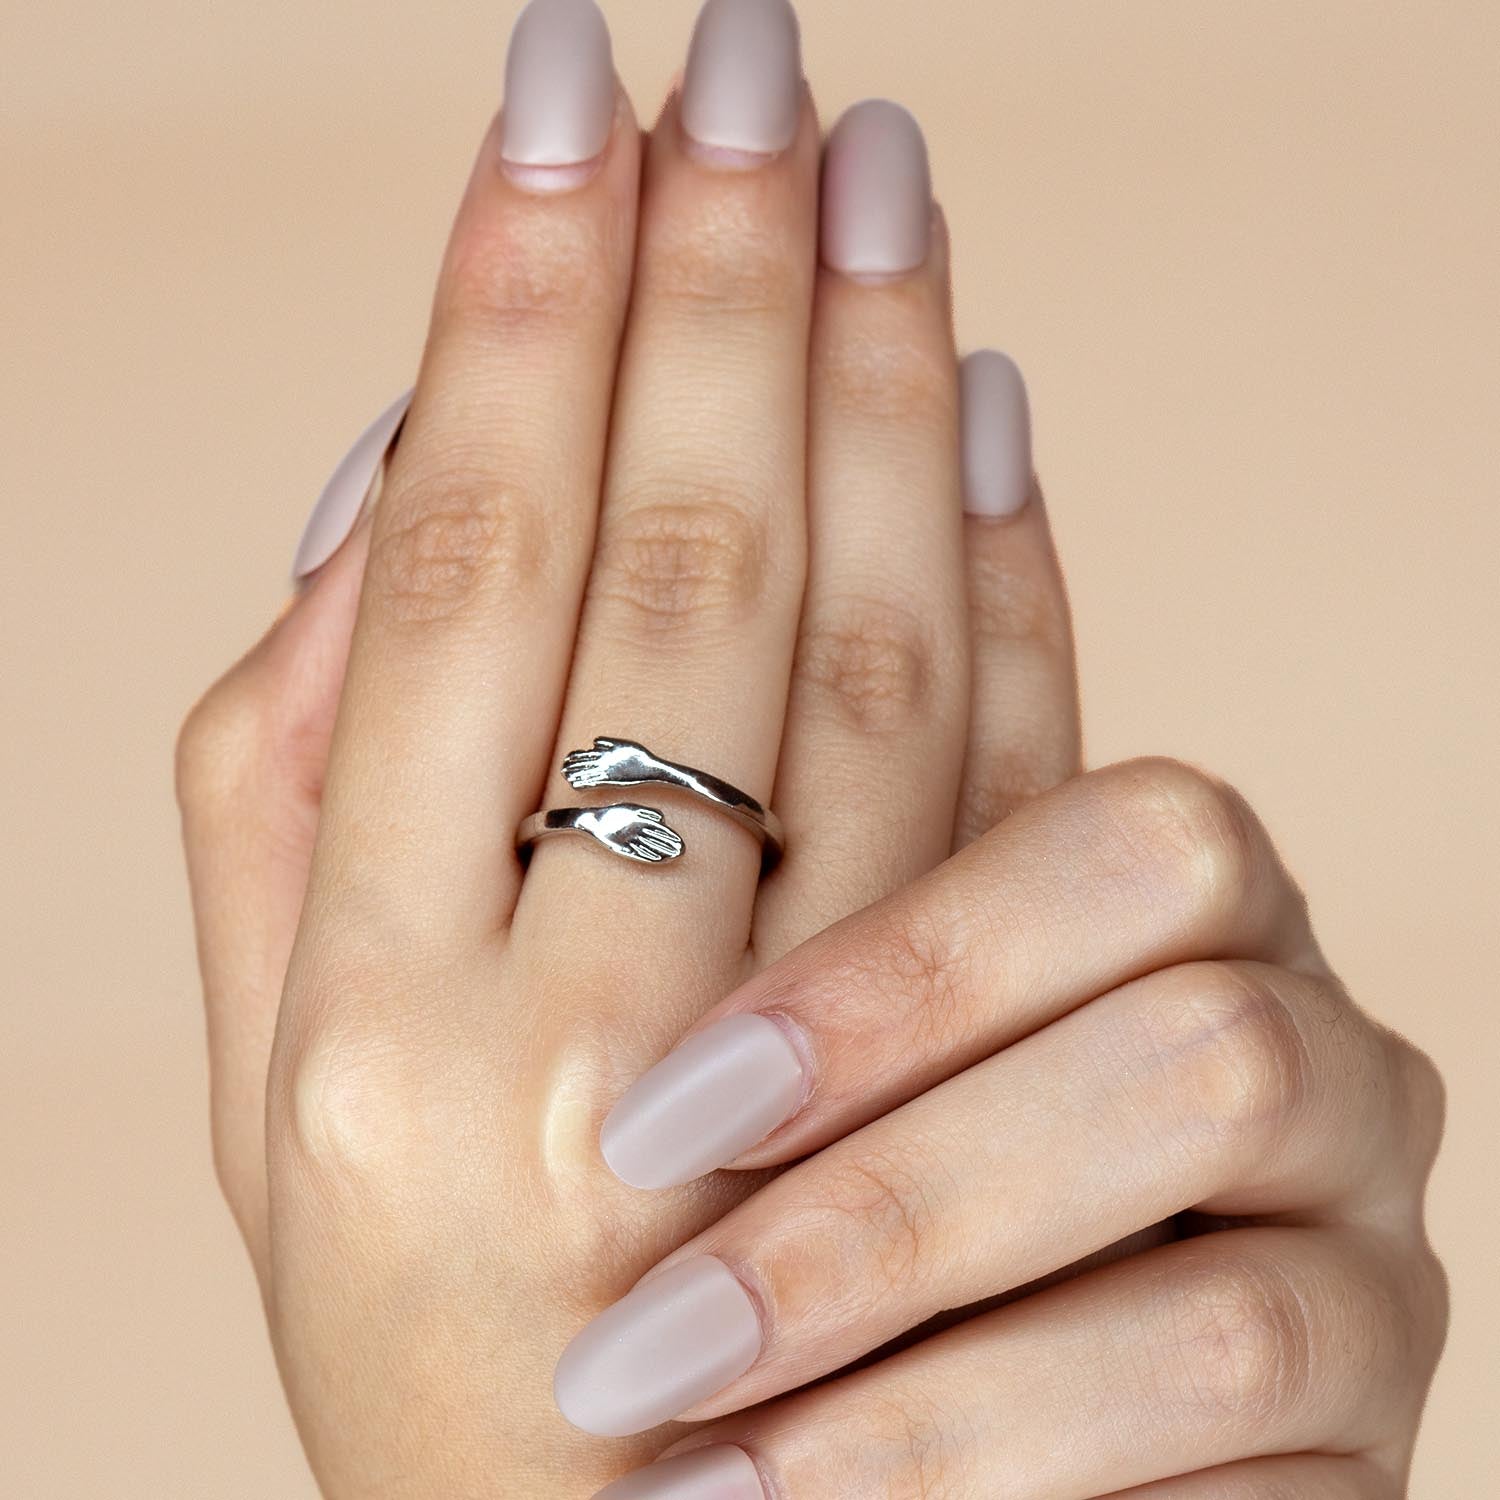 W Premium Jewellery Rings Hug Ring Silver